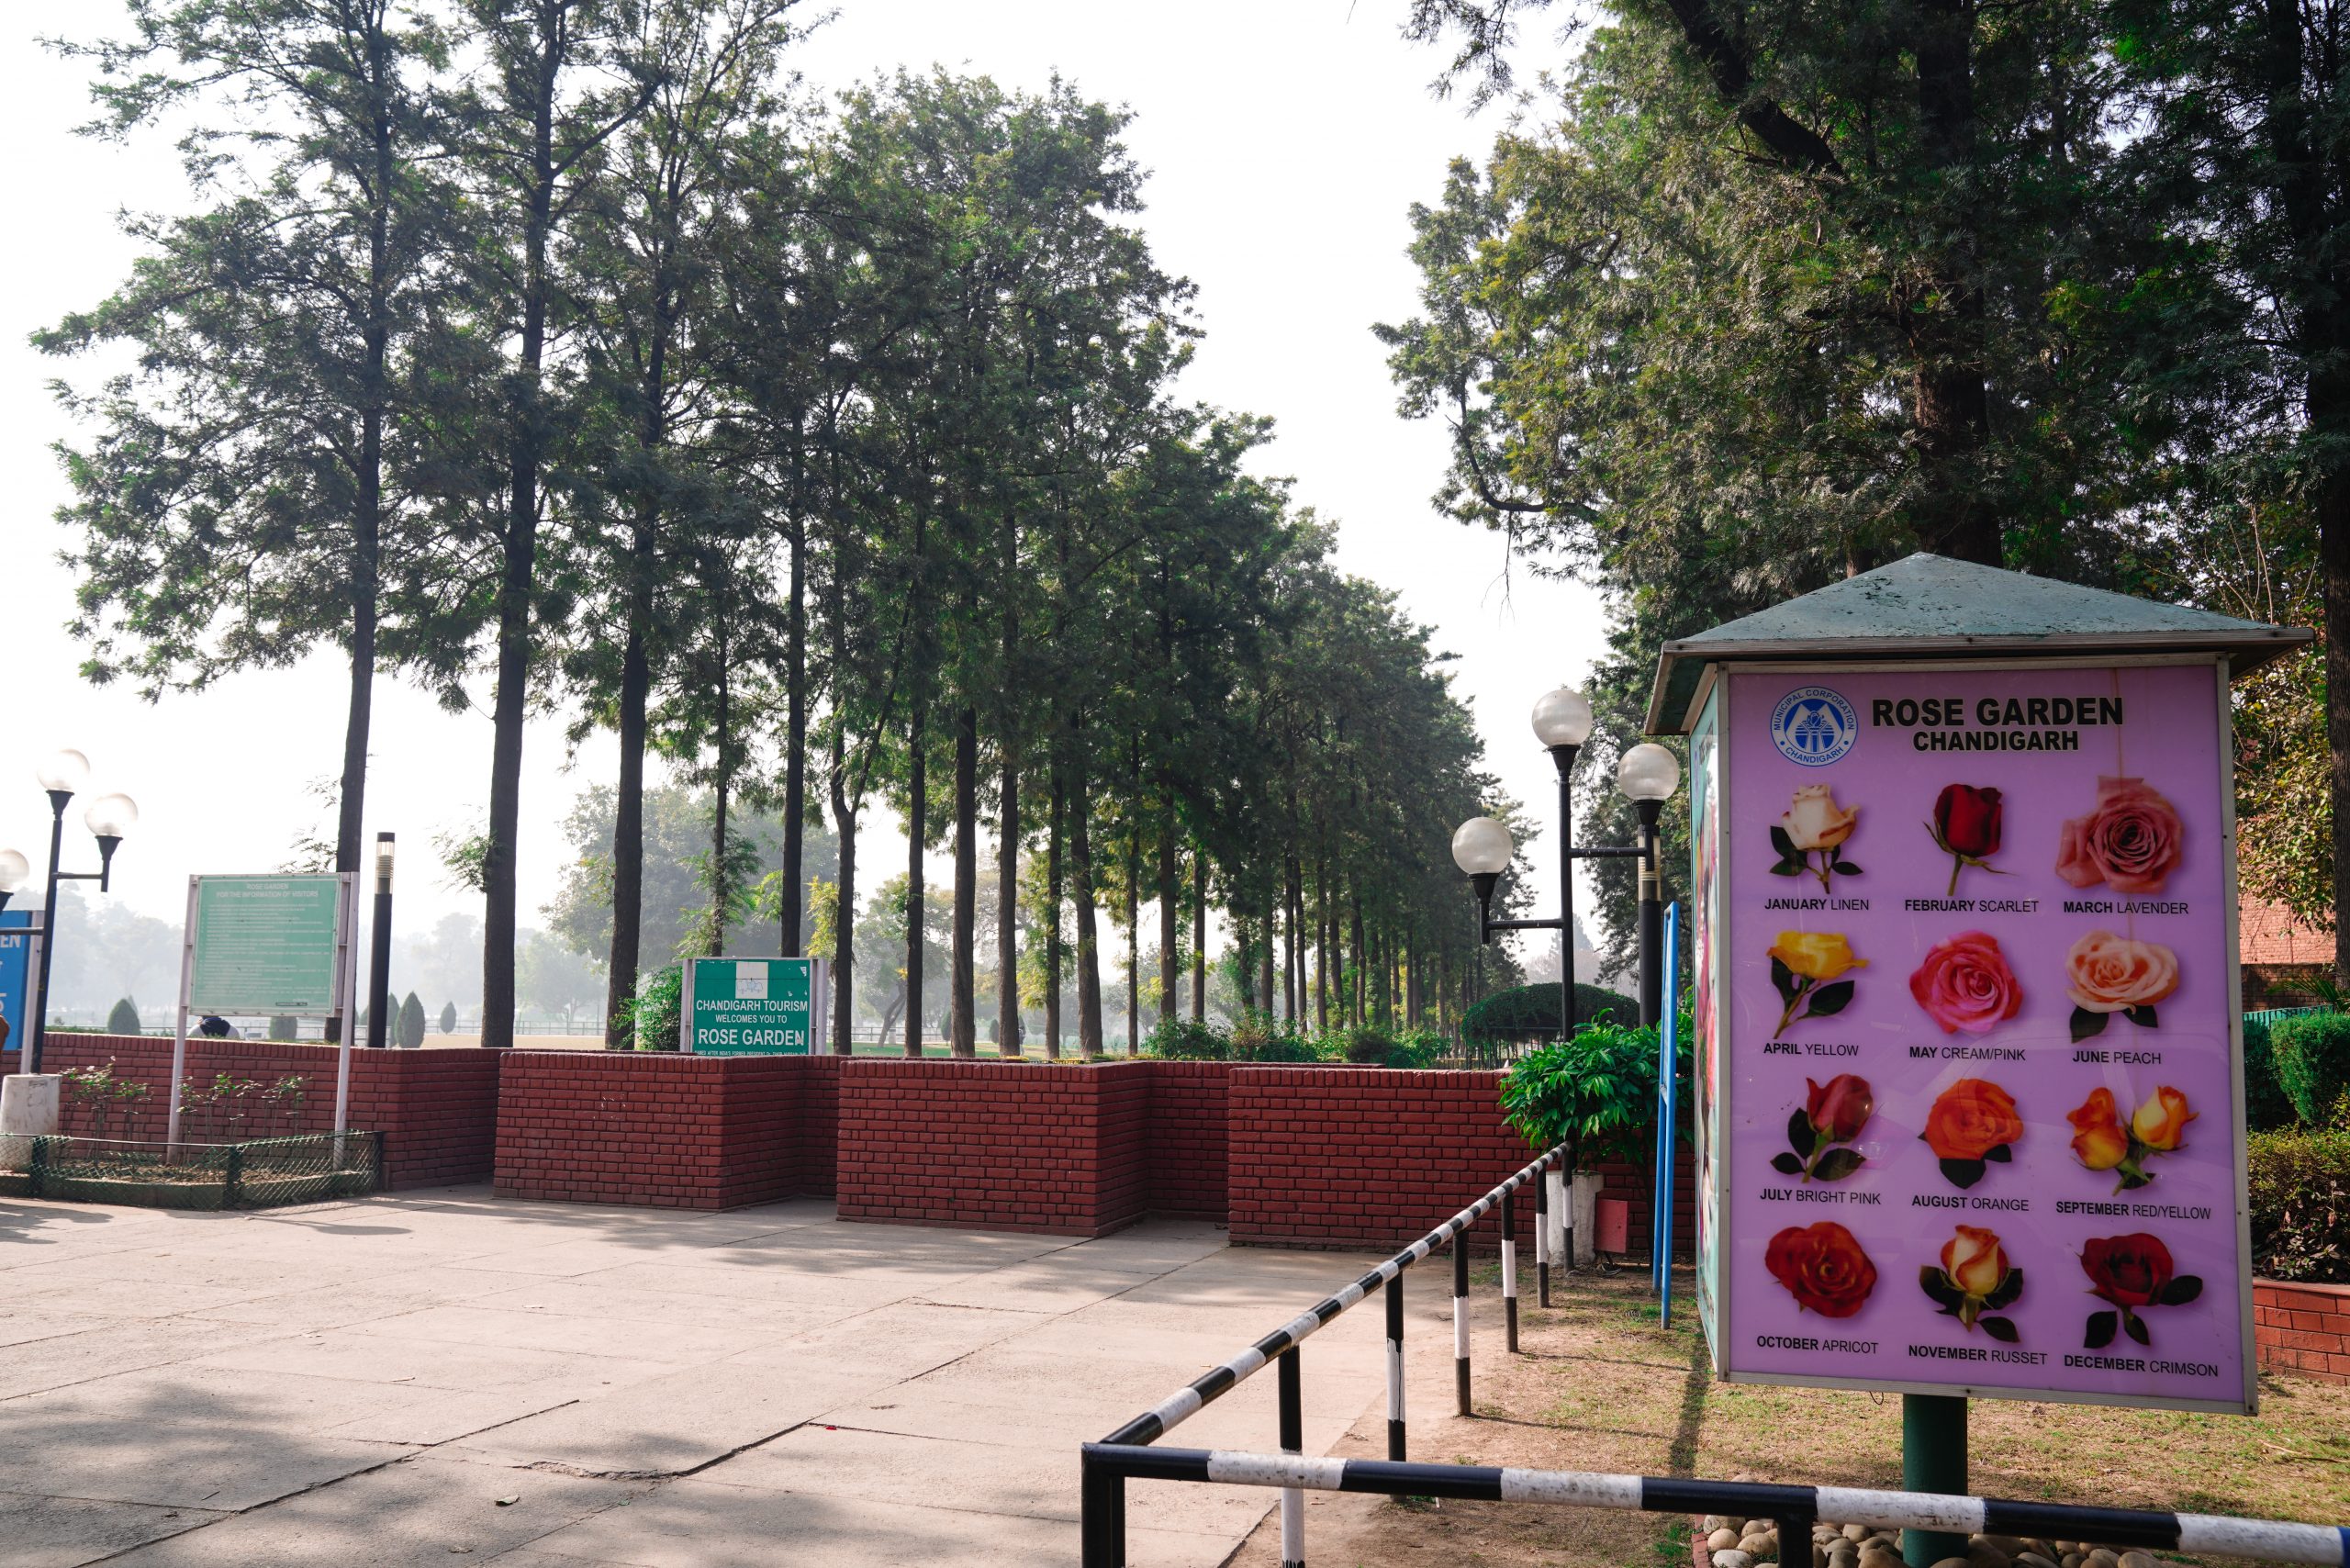 Entrance of Rose Garden in Chandigarh